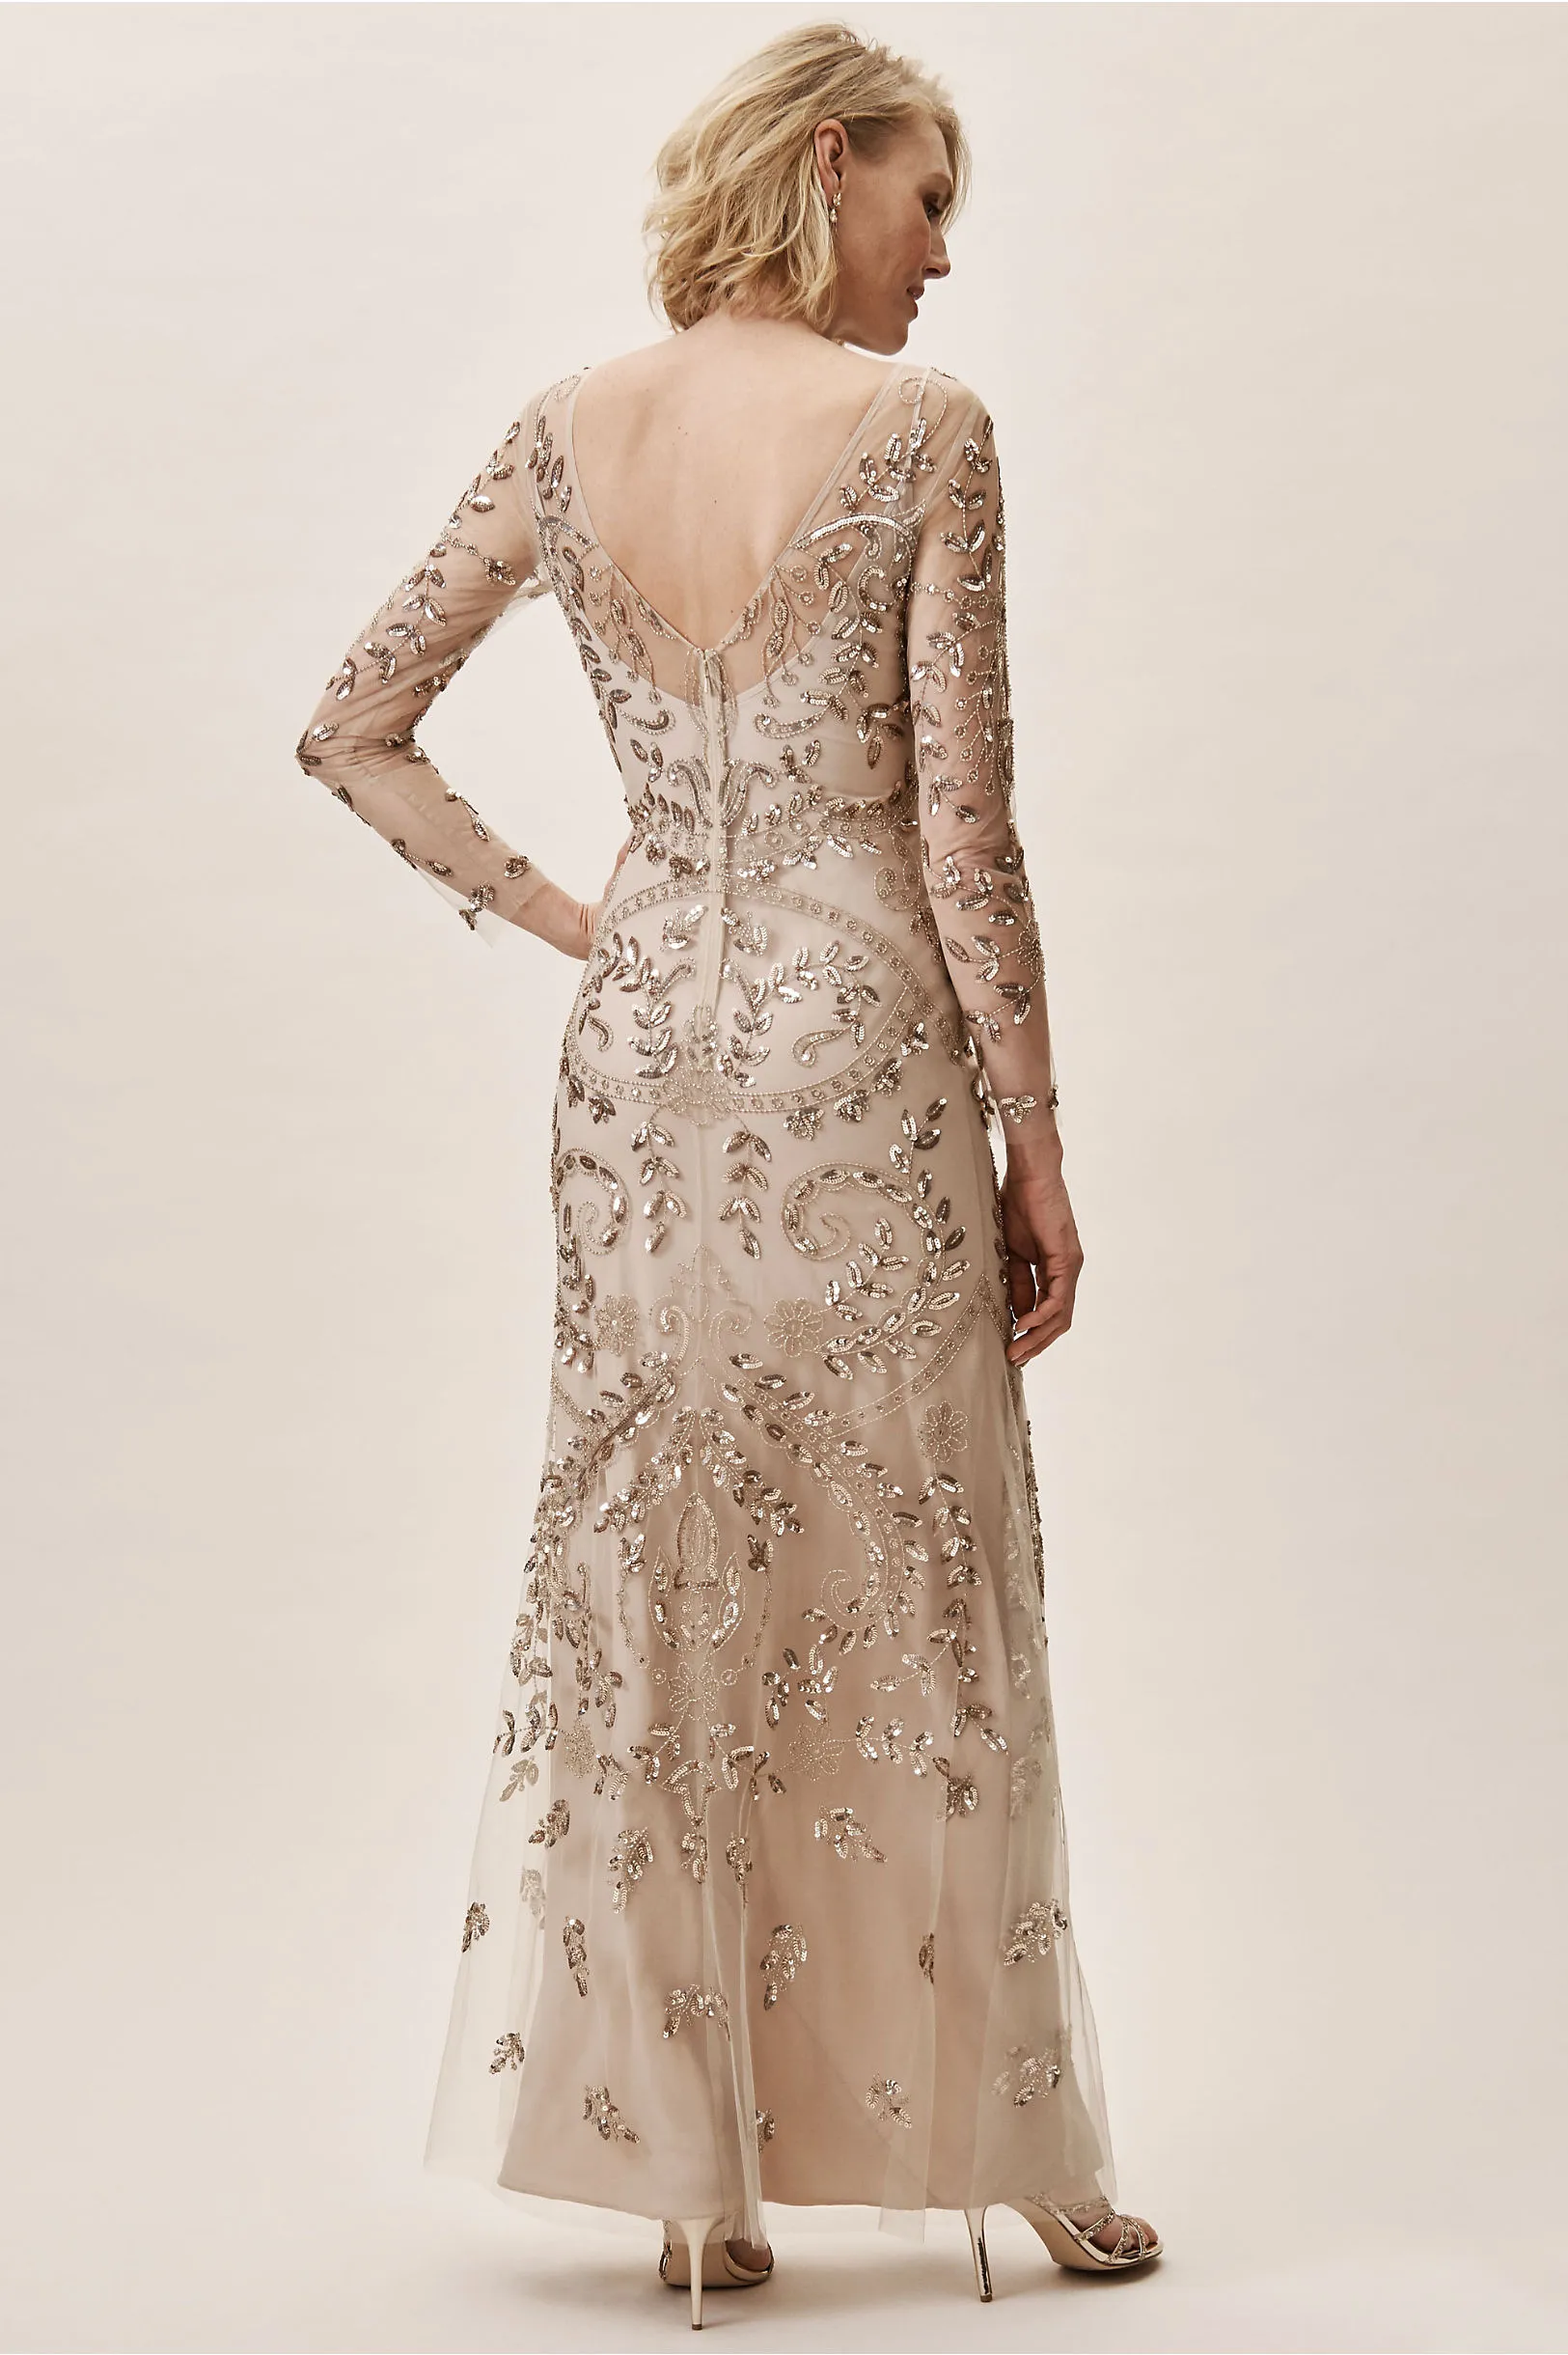 BHLDN Sutton Maxi Dress Gown Size 18 Midnight Embellished Formal $248 | eBay